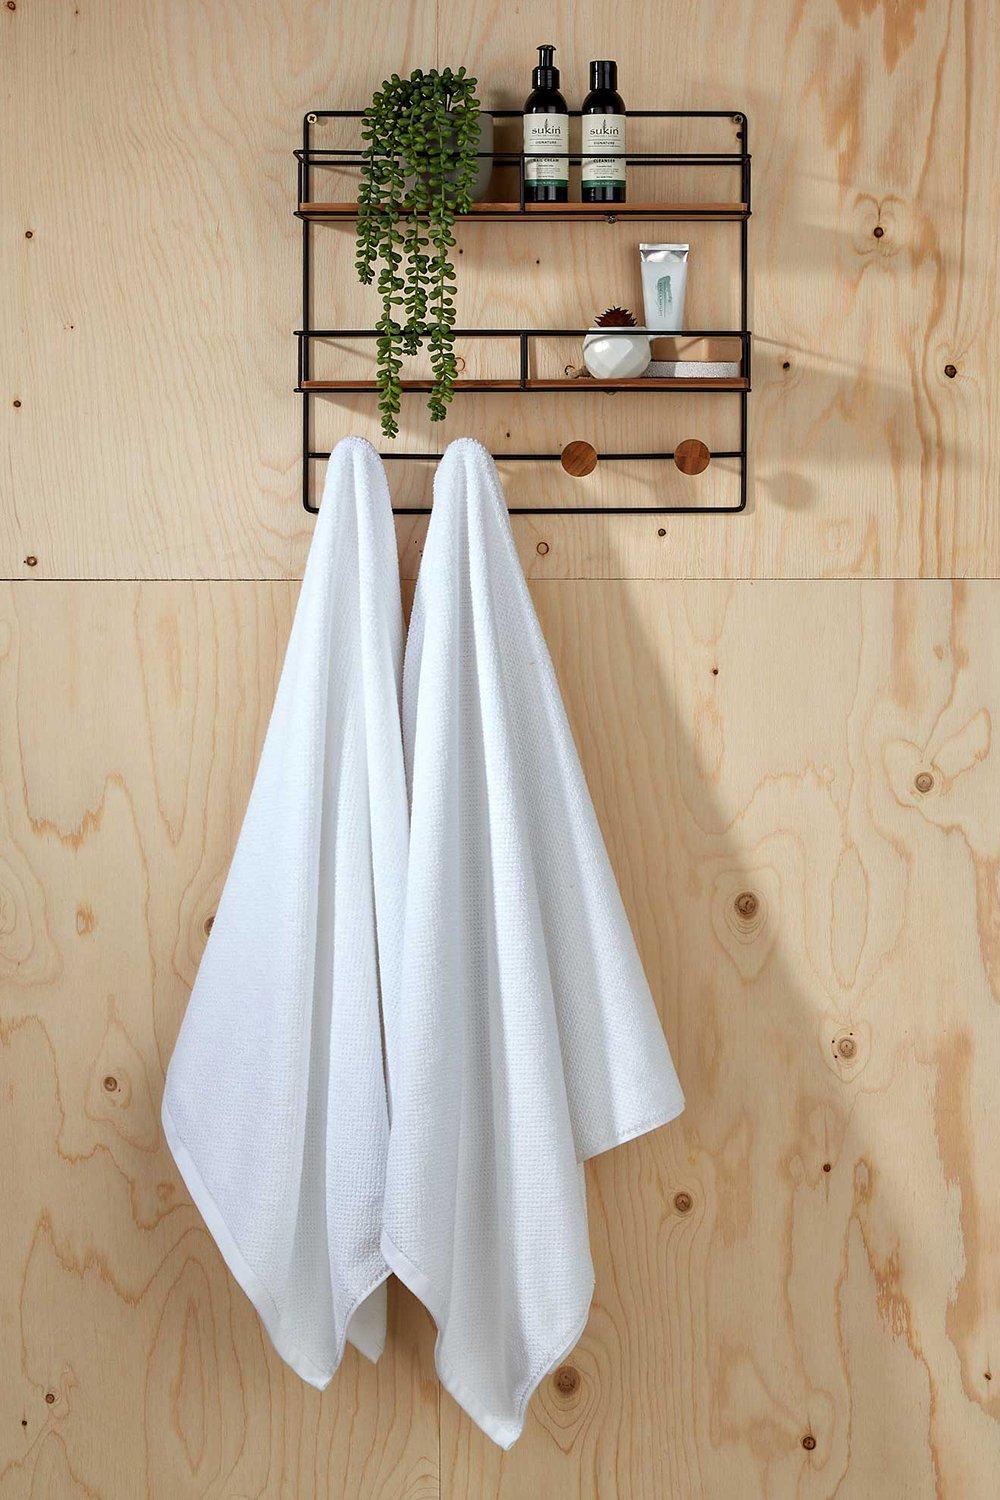 Christy - Brixton Towel - White - Bath Towel